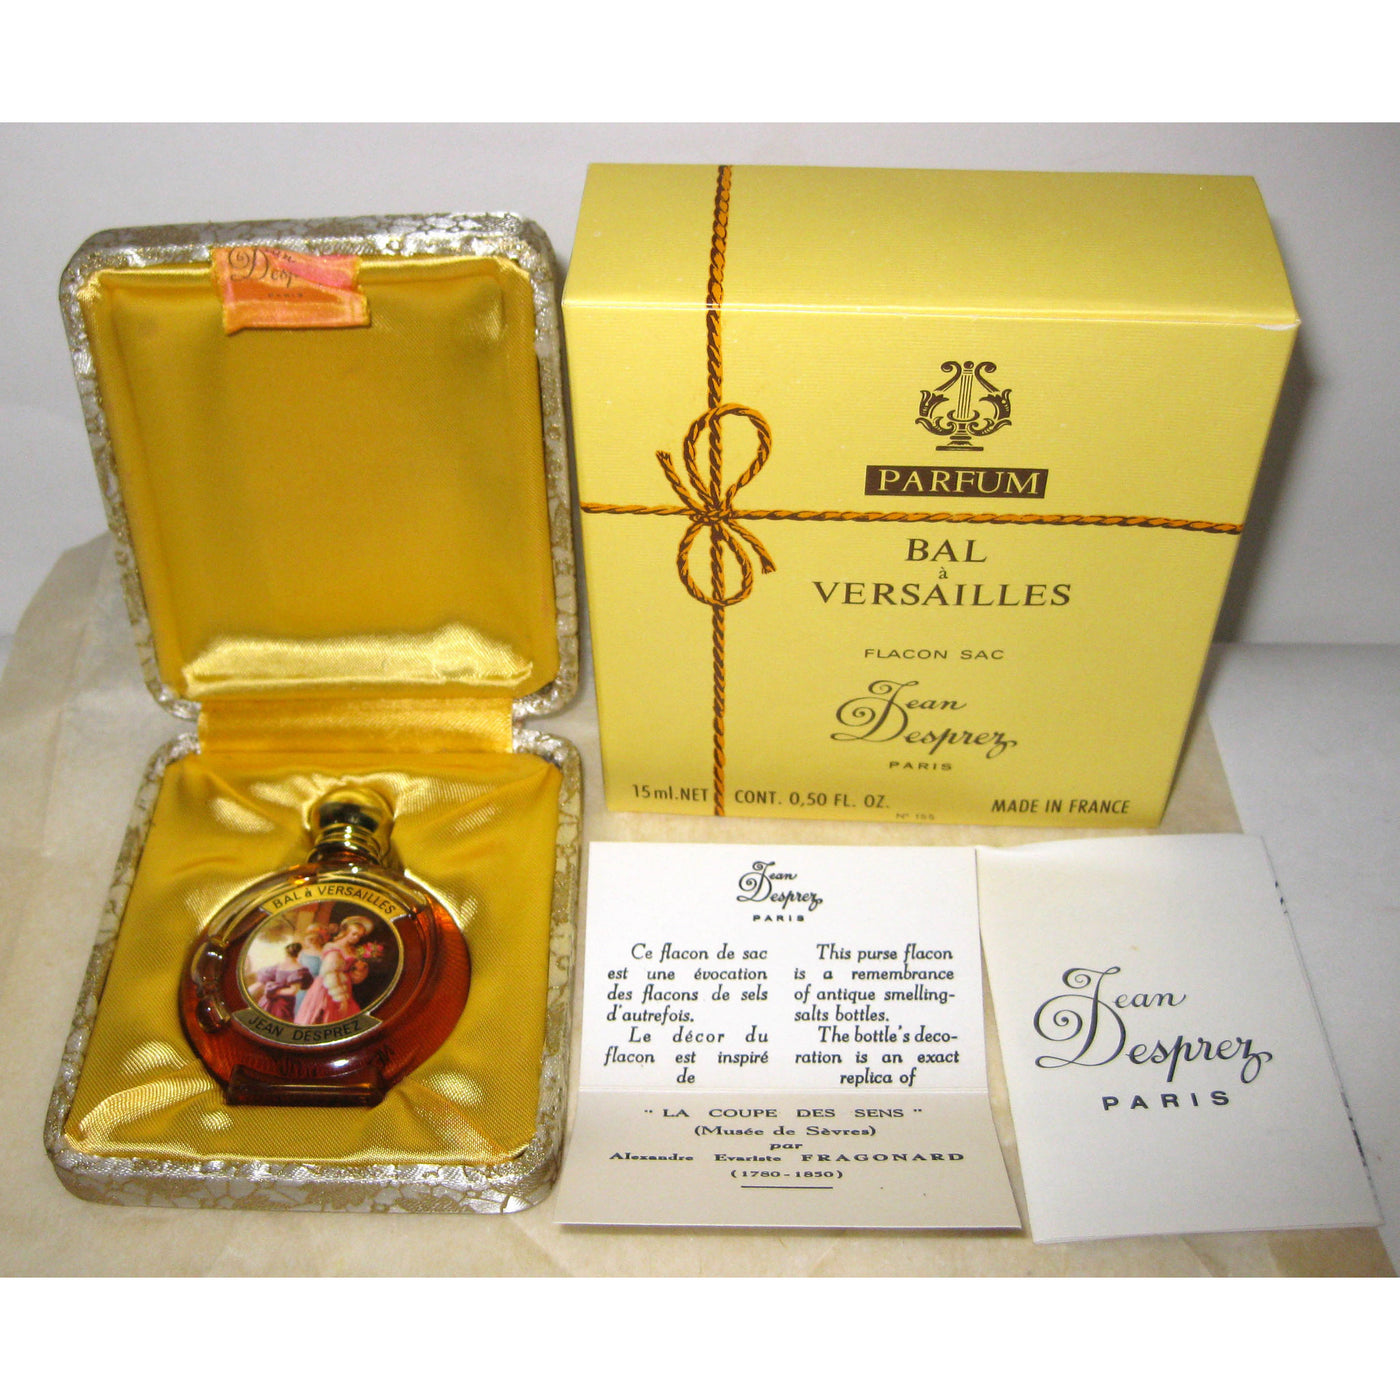 Vintage Jean Desprez Bal a Versailles Parfum Flacon Sac